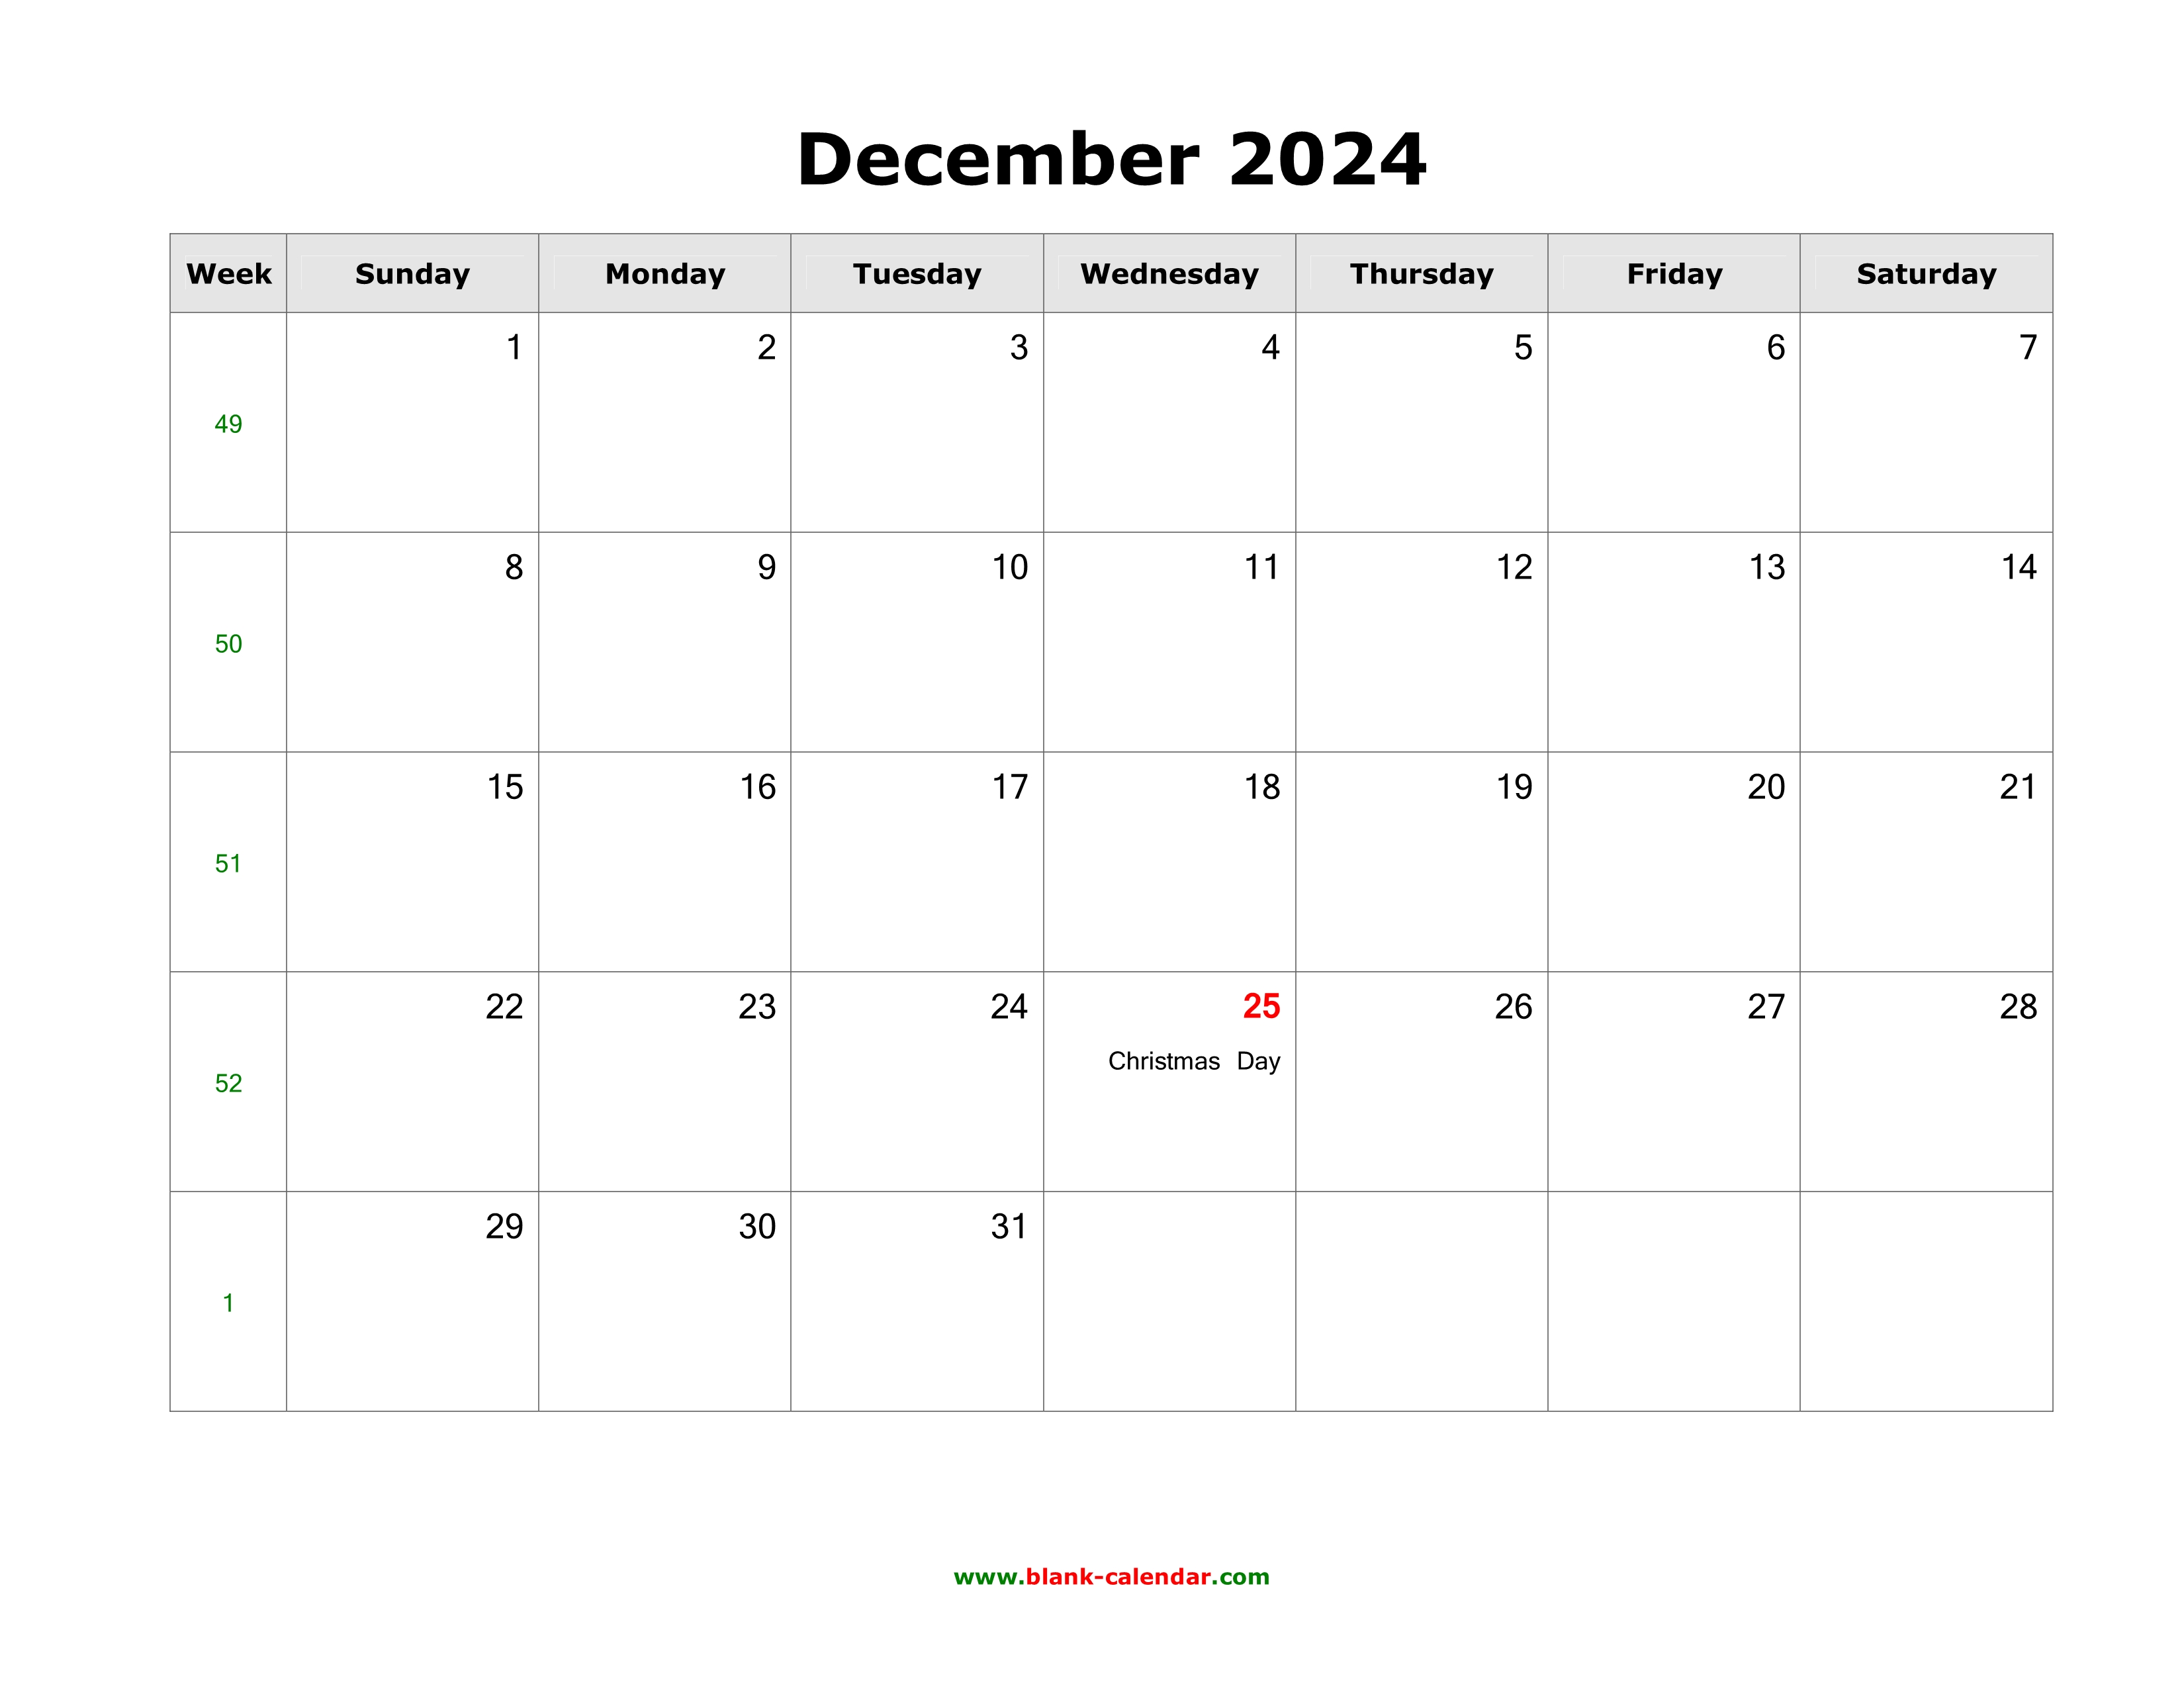 Download December 2024 Blank Calendar with US Holidays (horizontal)